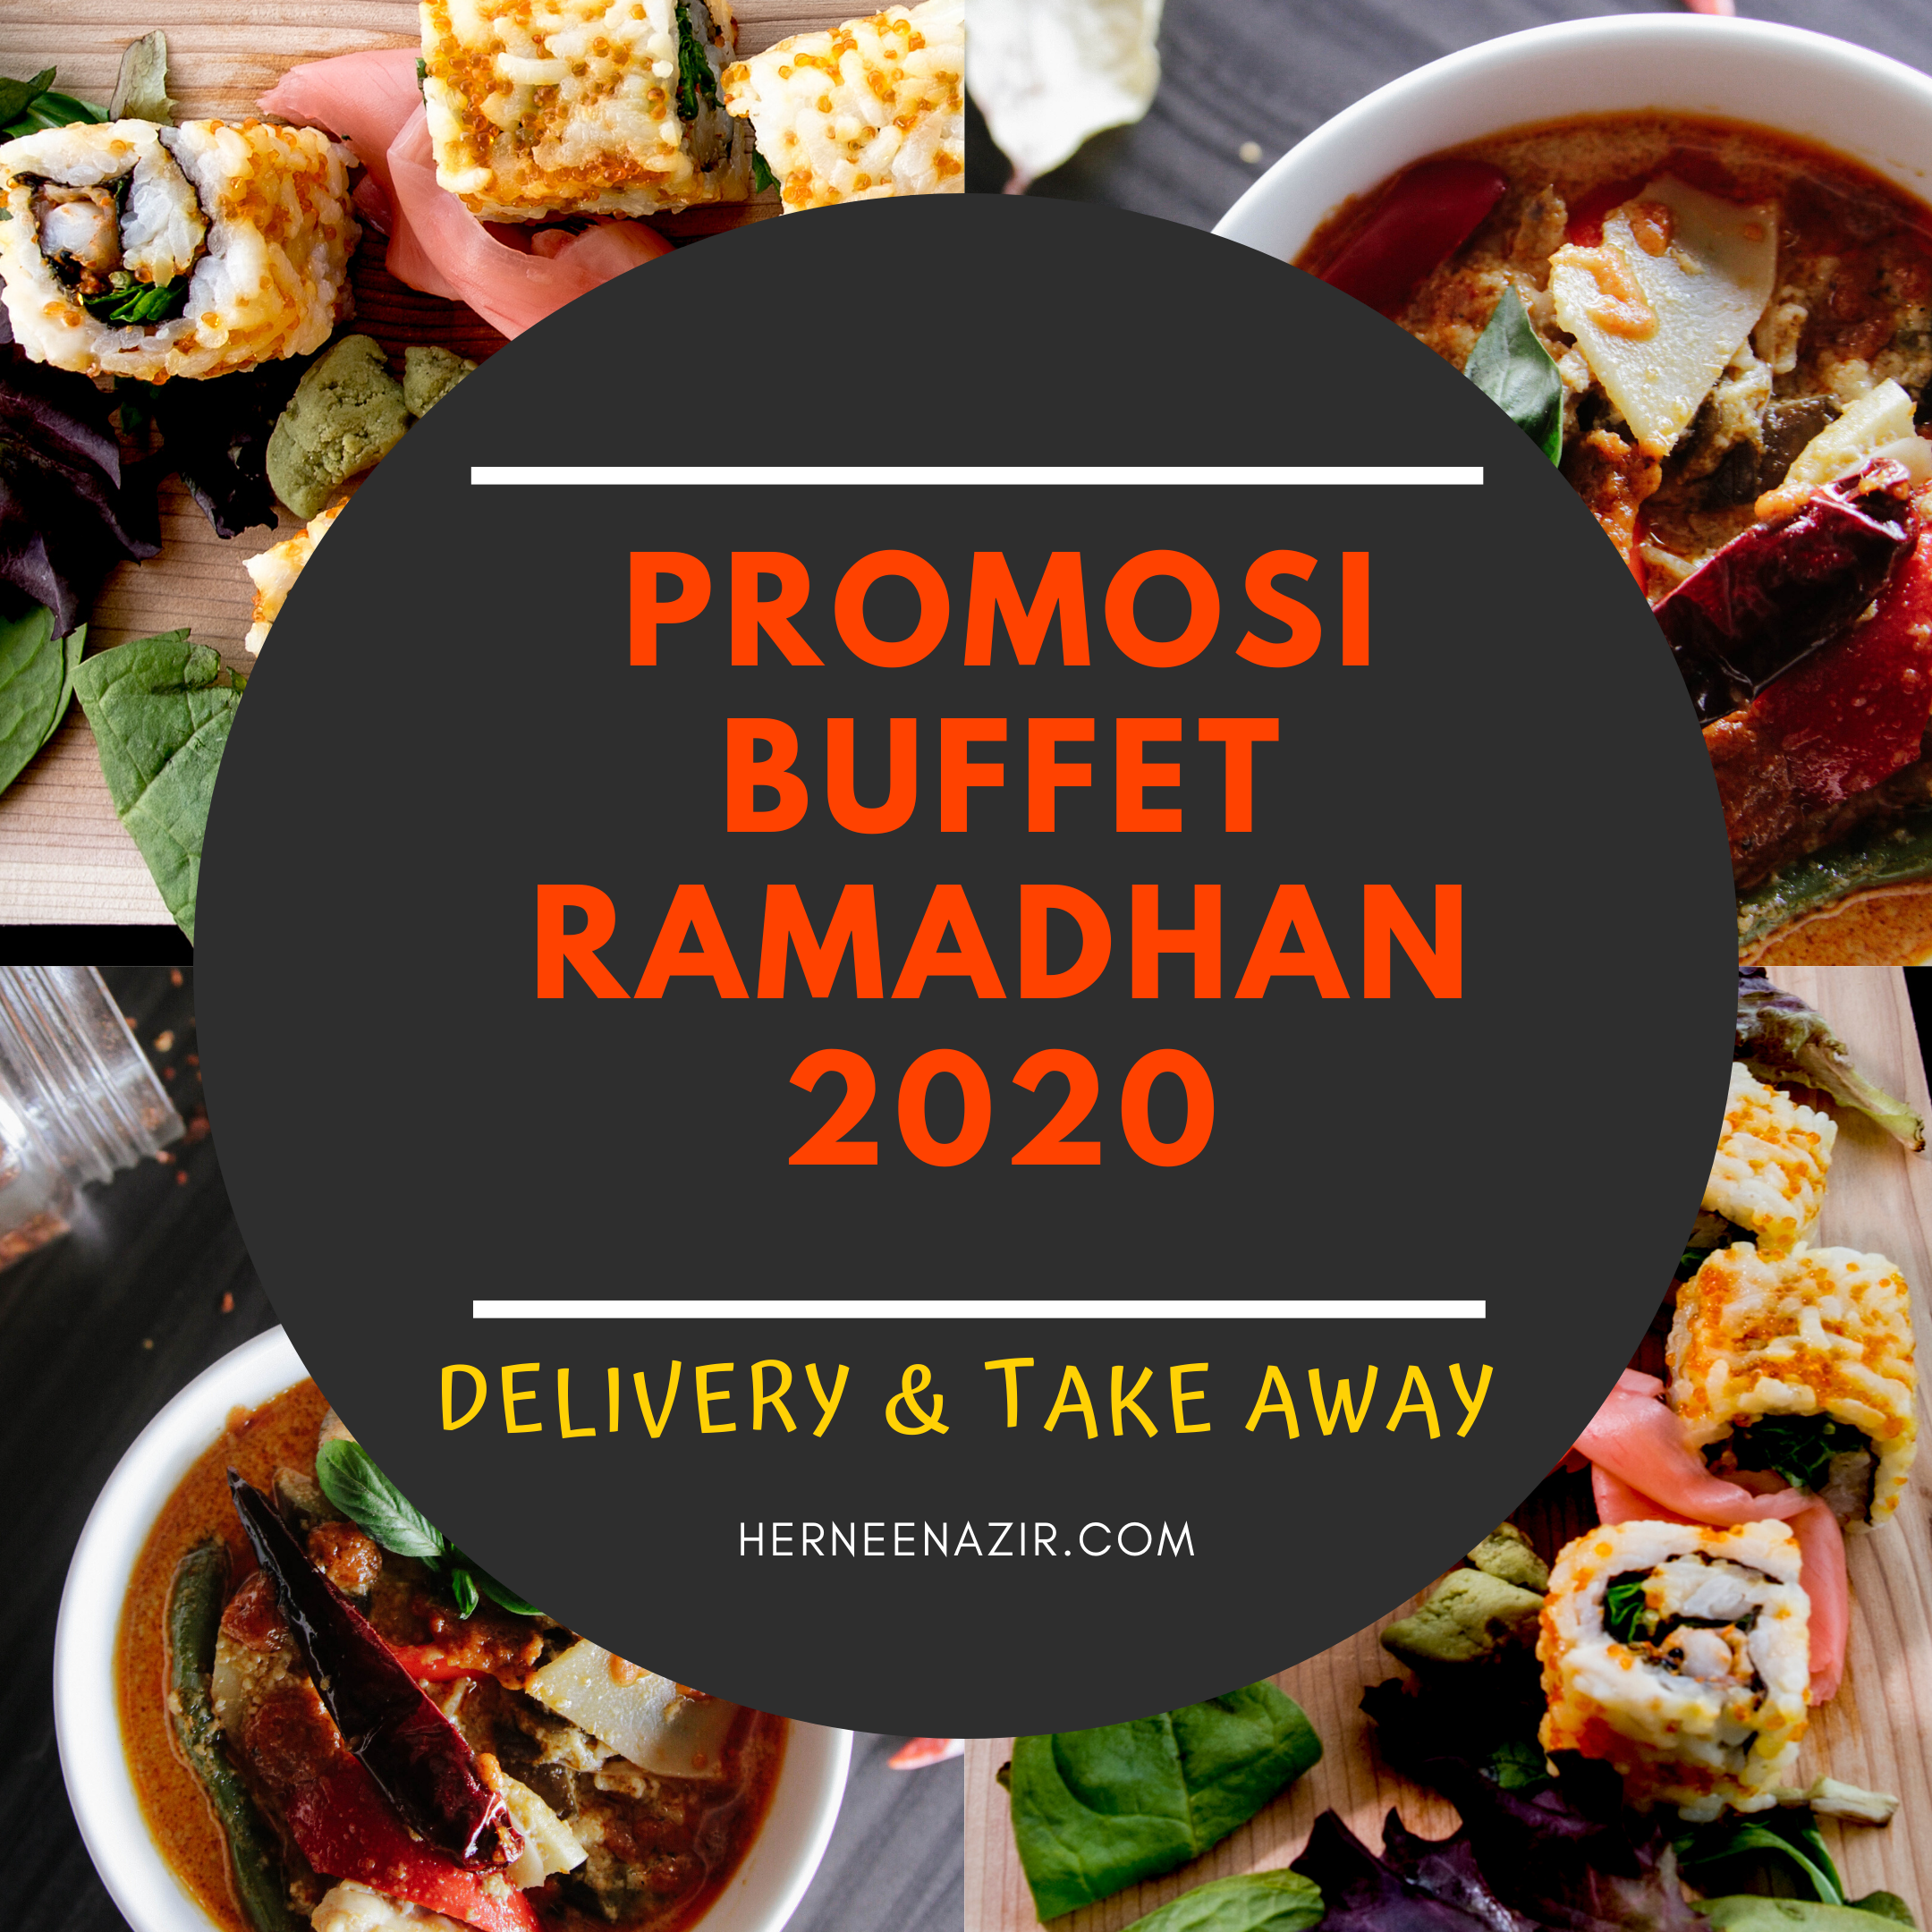 Promosi Buffet Ramadhan 2020 Hotel di Johor Bahru – Delivery & Take Away